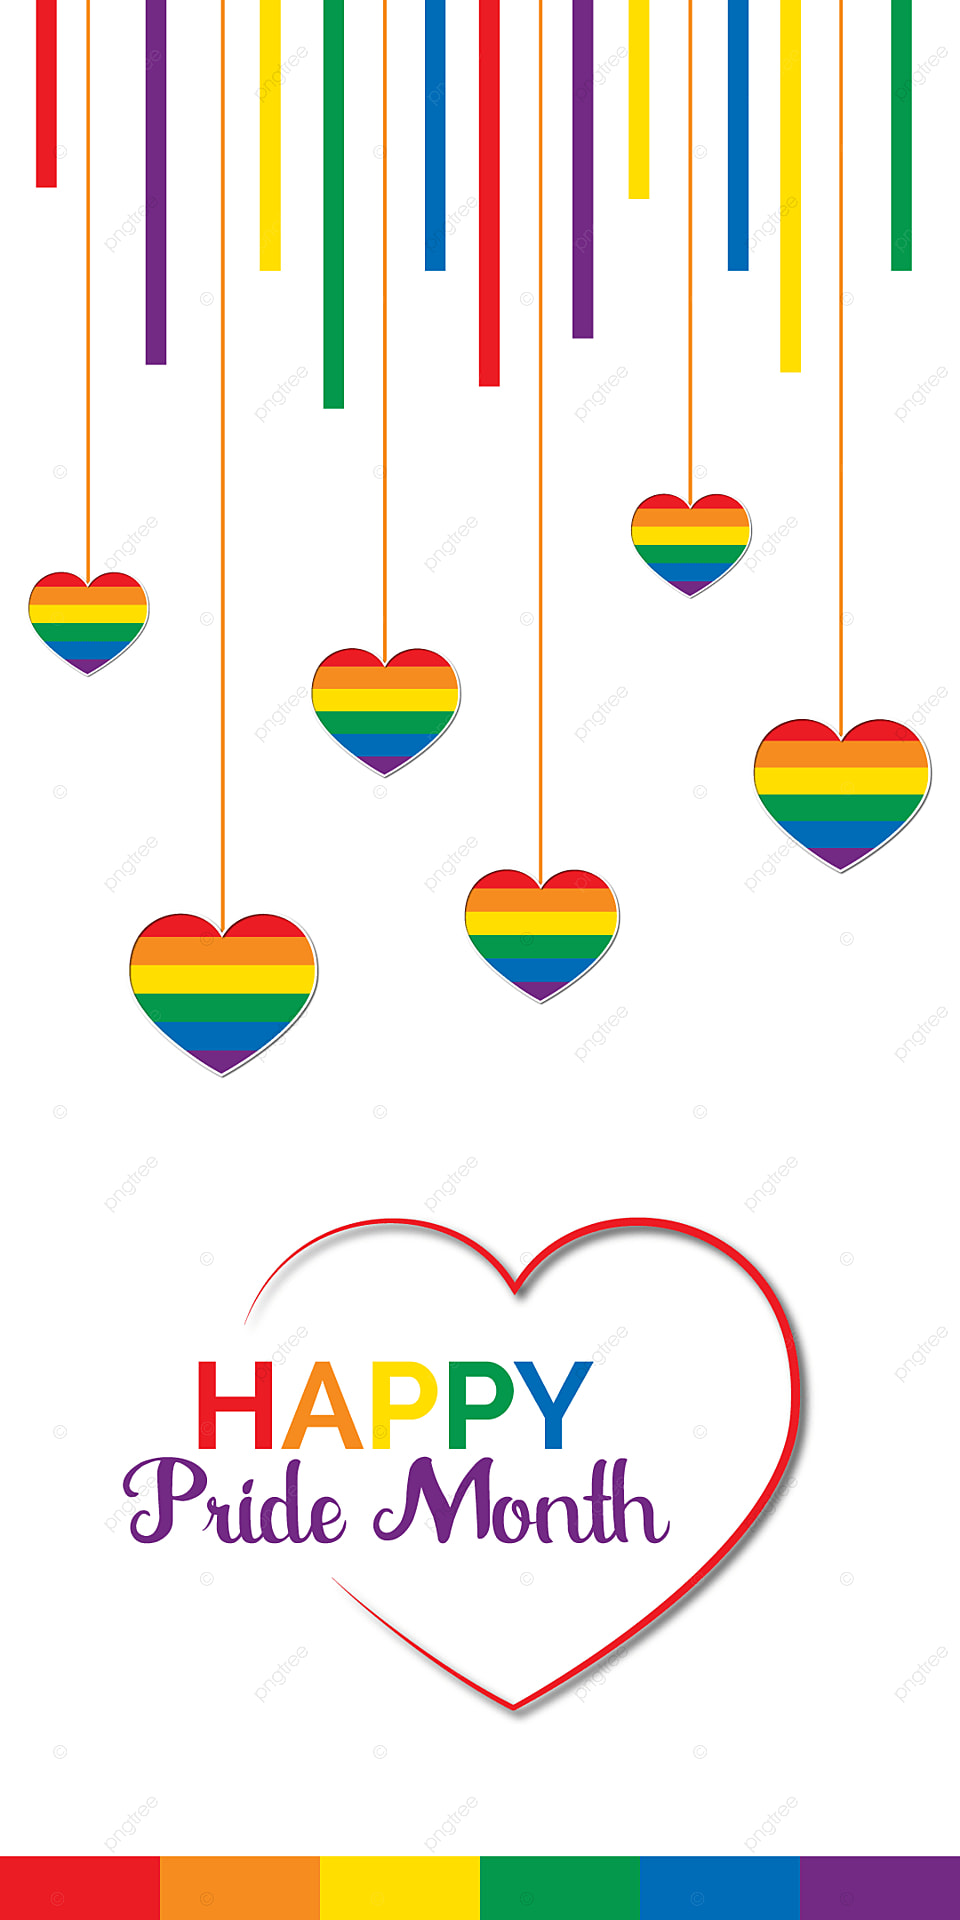 [21+] Happy Pride Month Wallpapers on WallpaperSafari